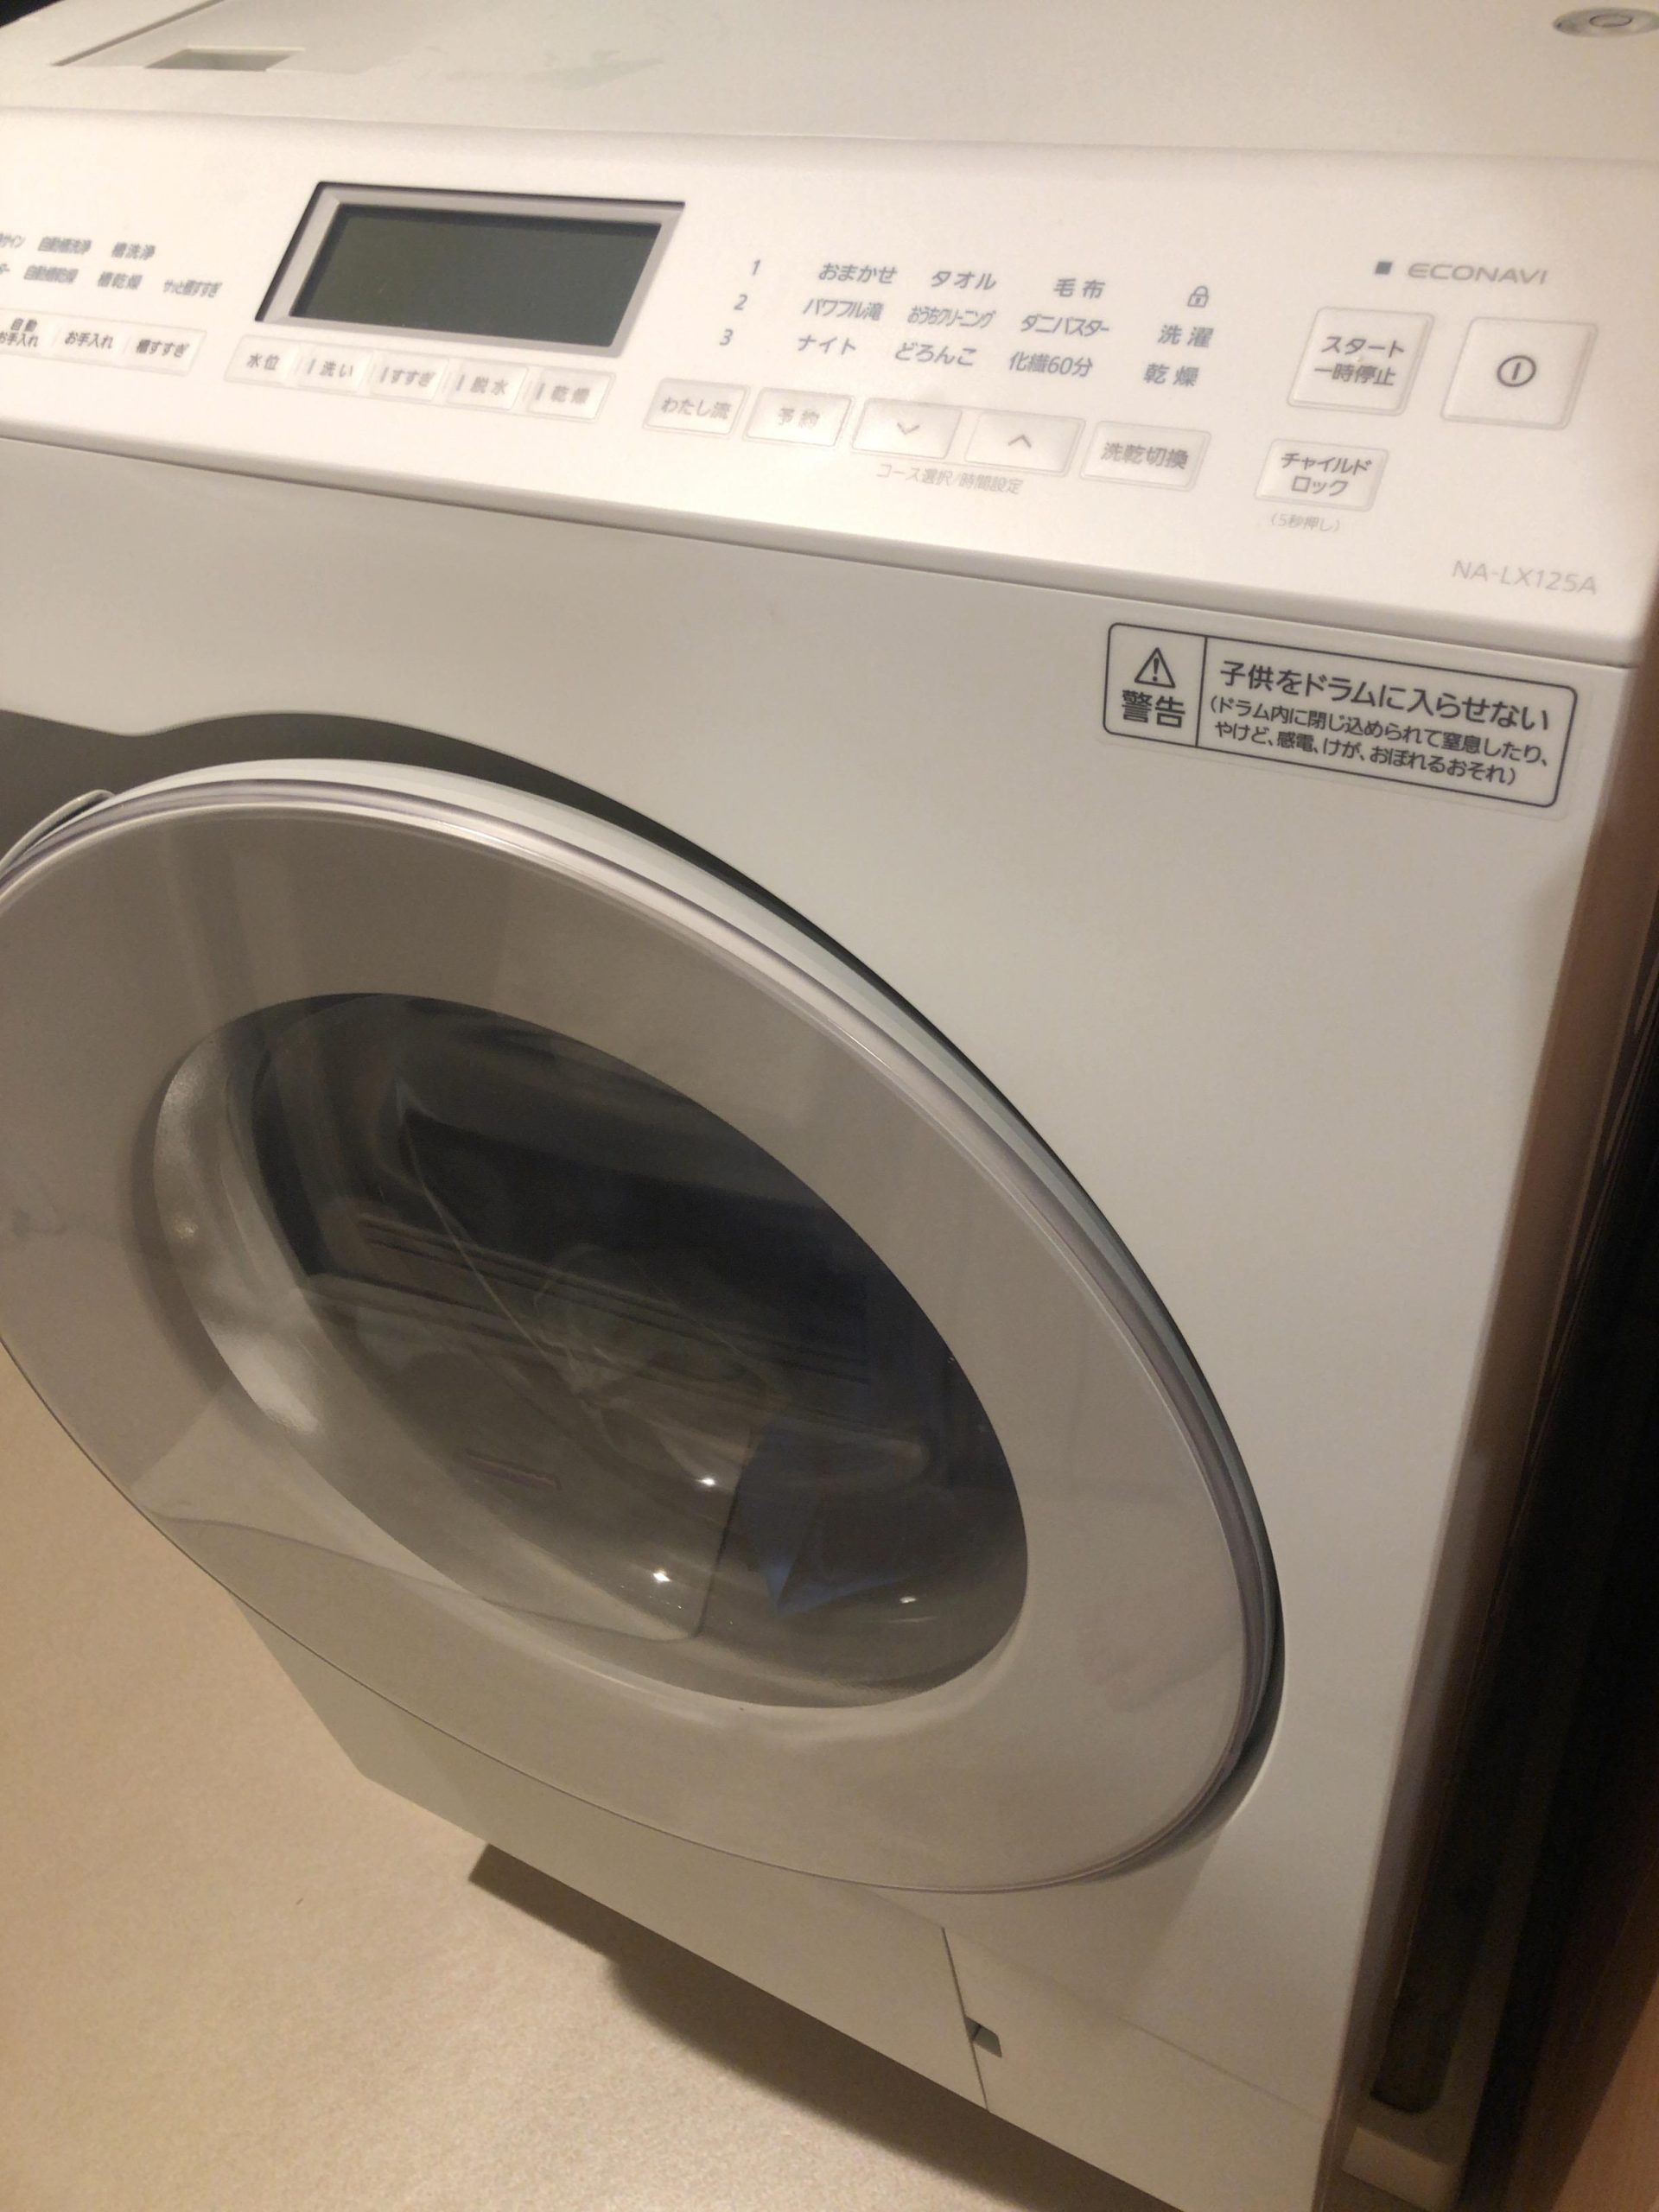 Panasonic LA NX125A ドラム式洗濯機　ECONAVI 22年式兵庫県です